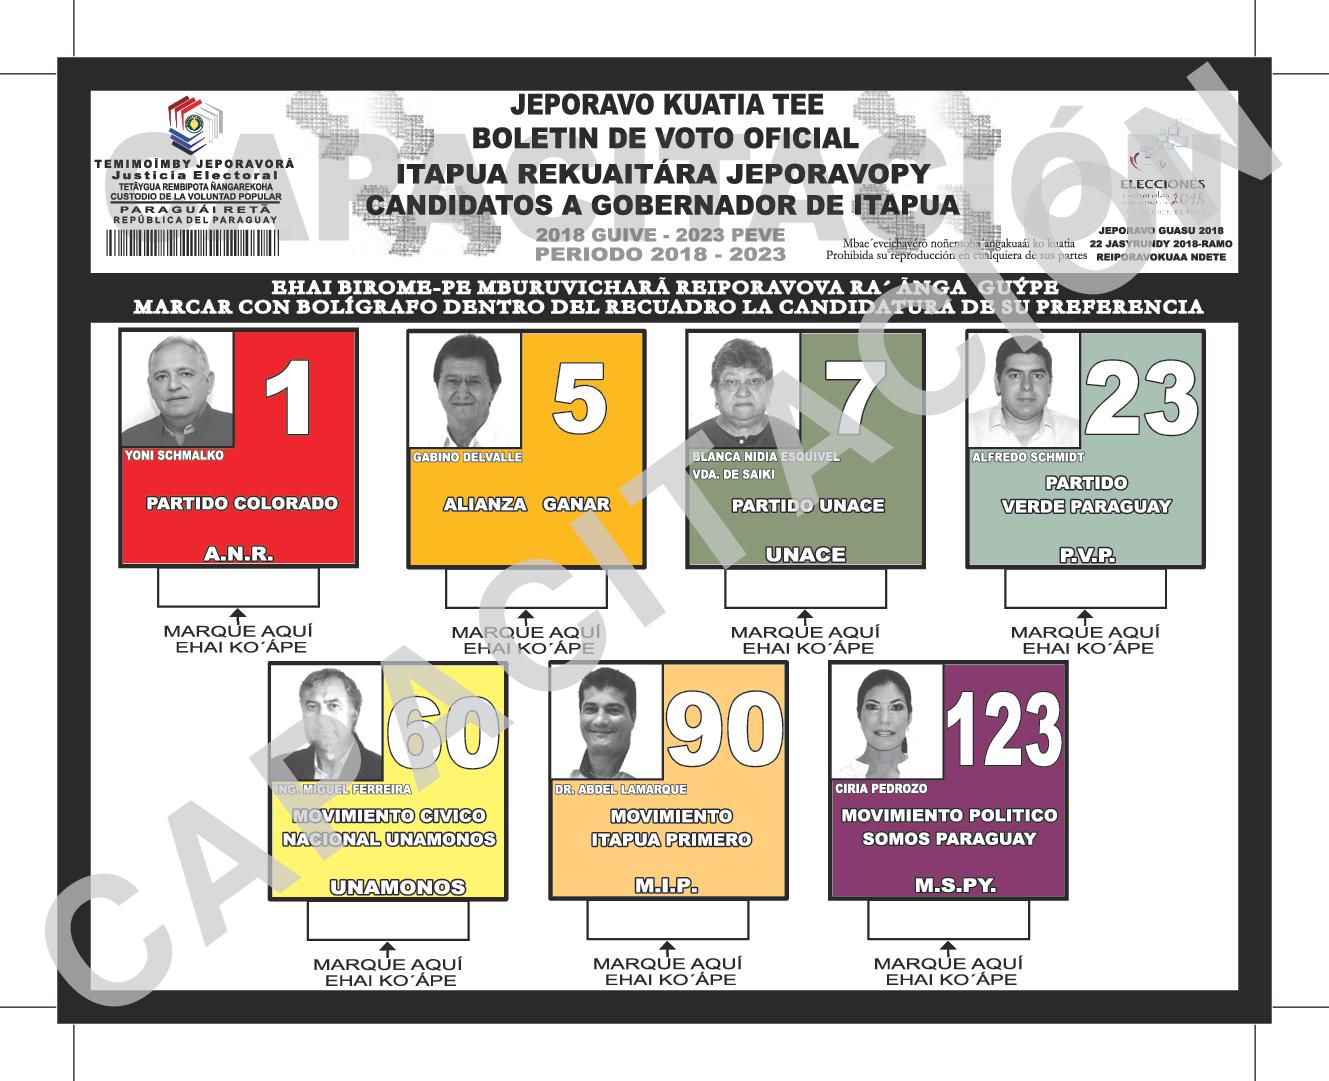 Boletin de voto de candidatos a GOBERNADOR de ITAPUA